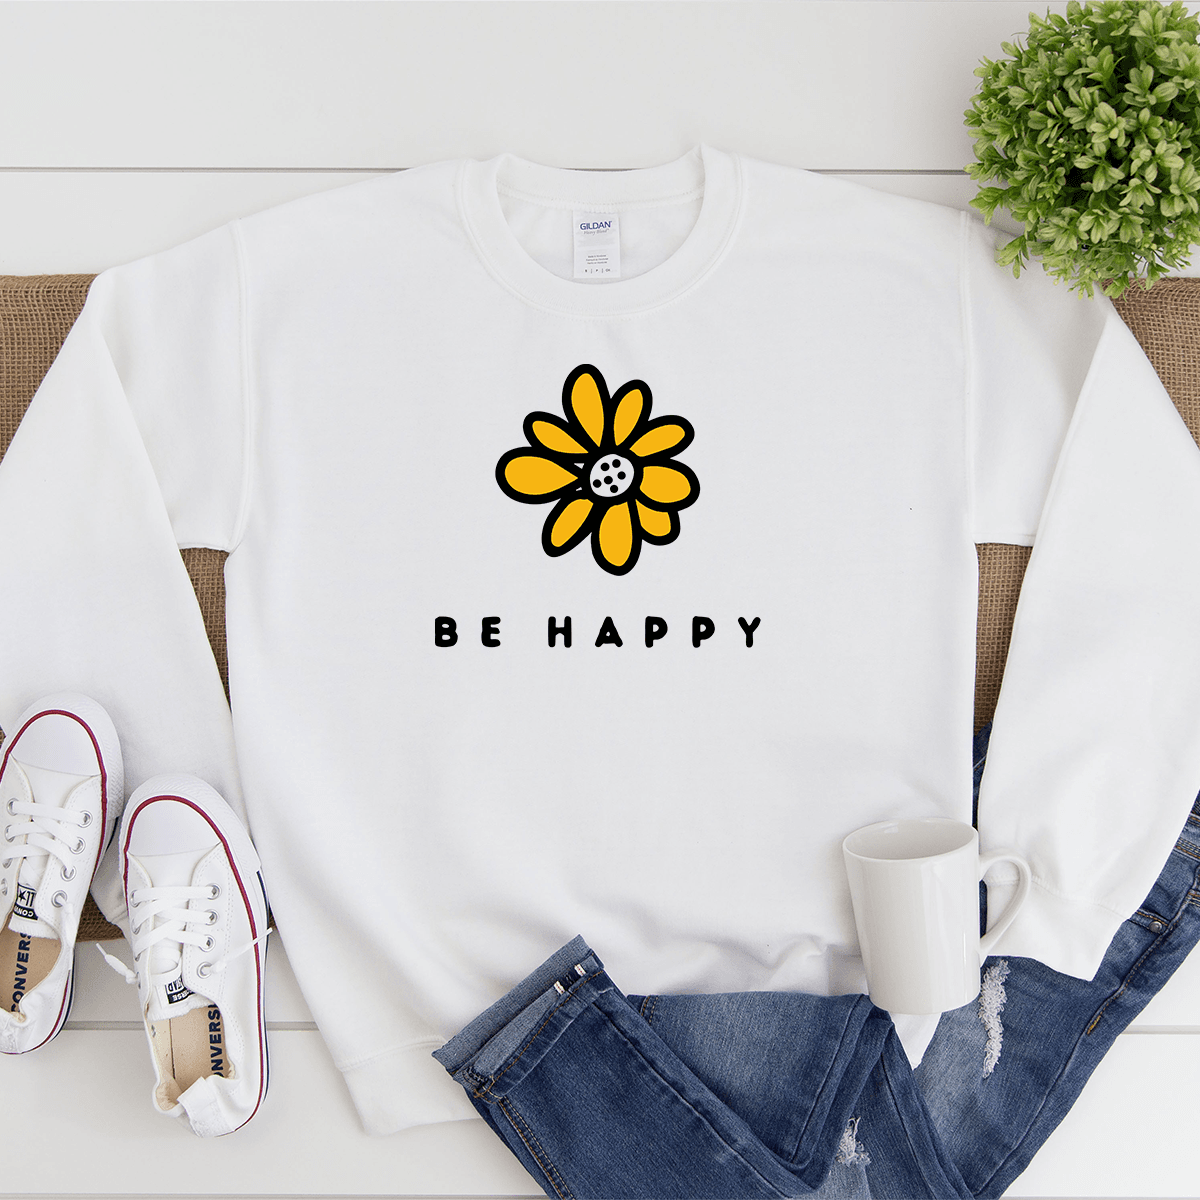 Be Happy - Sweatshirt